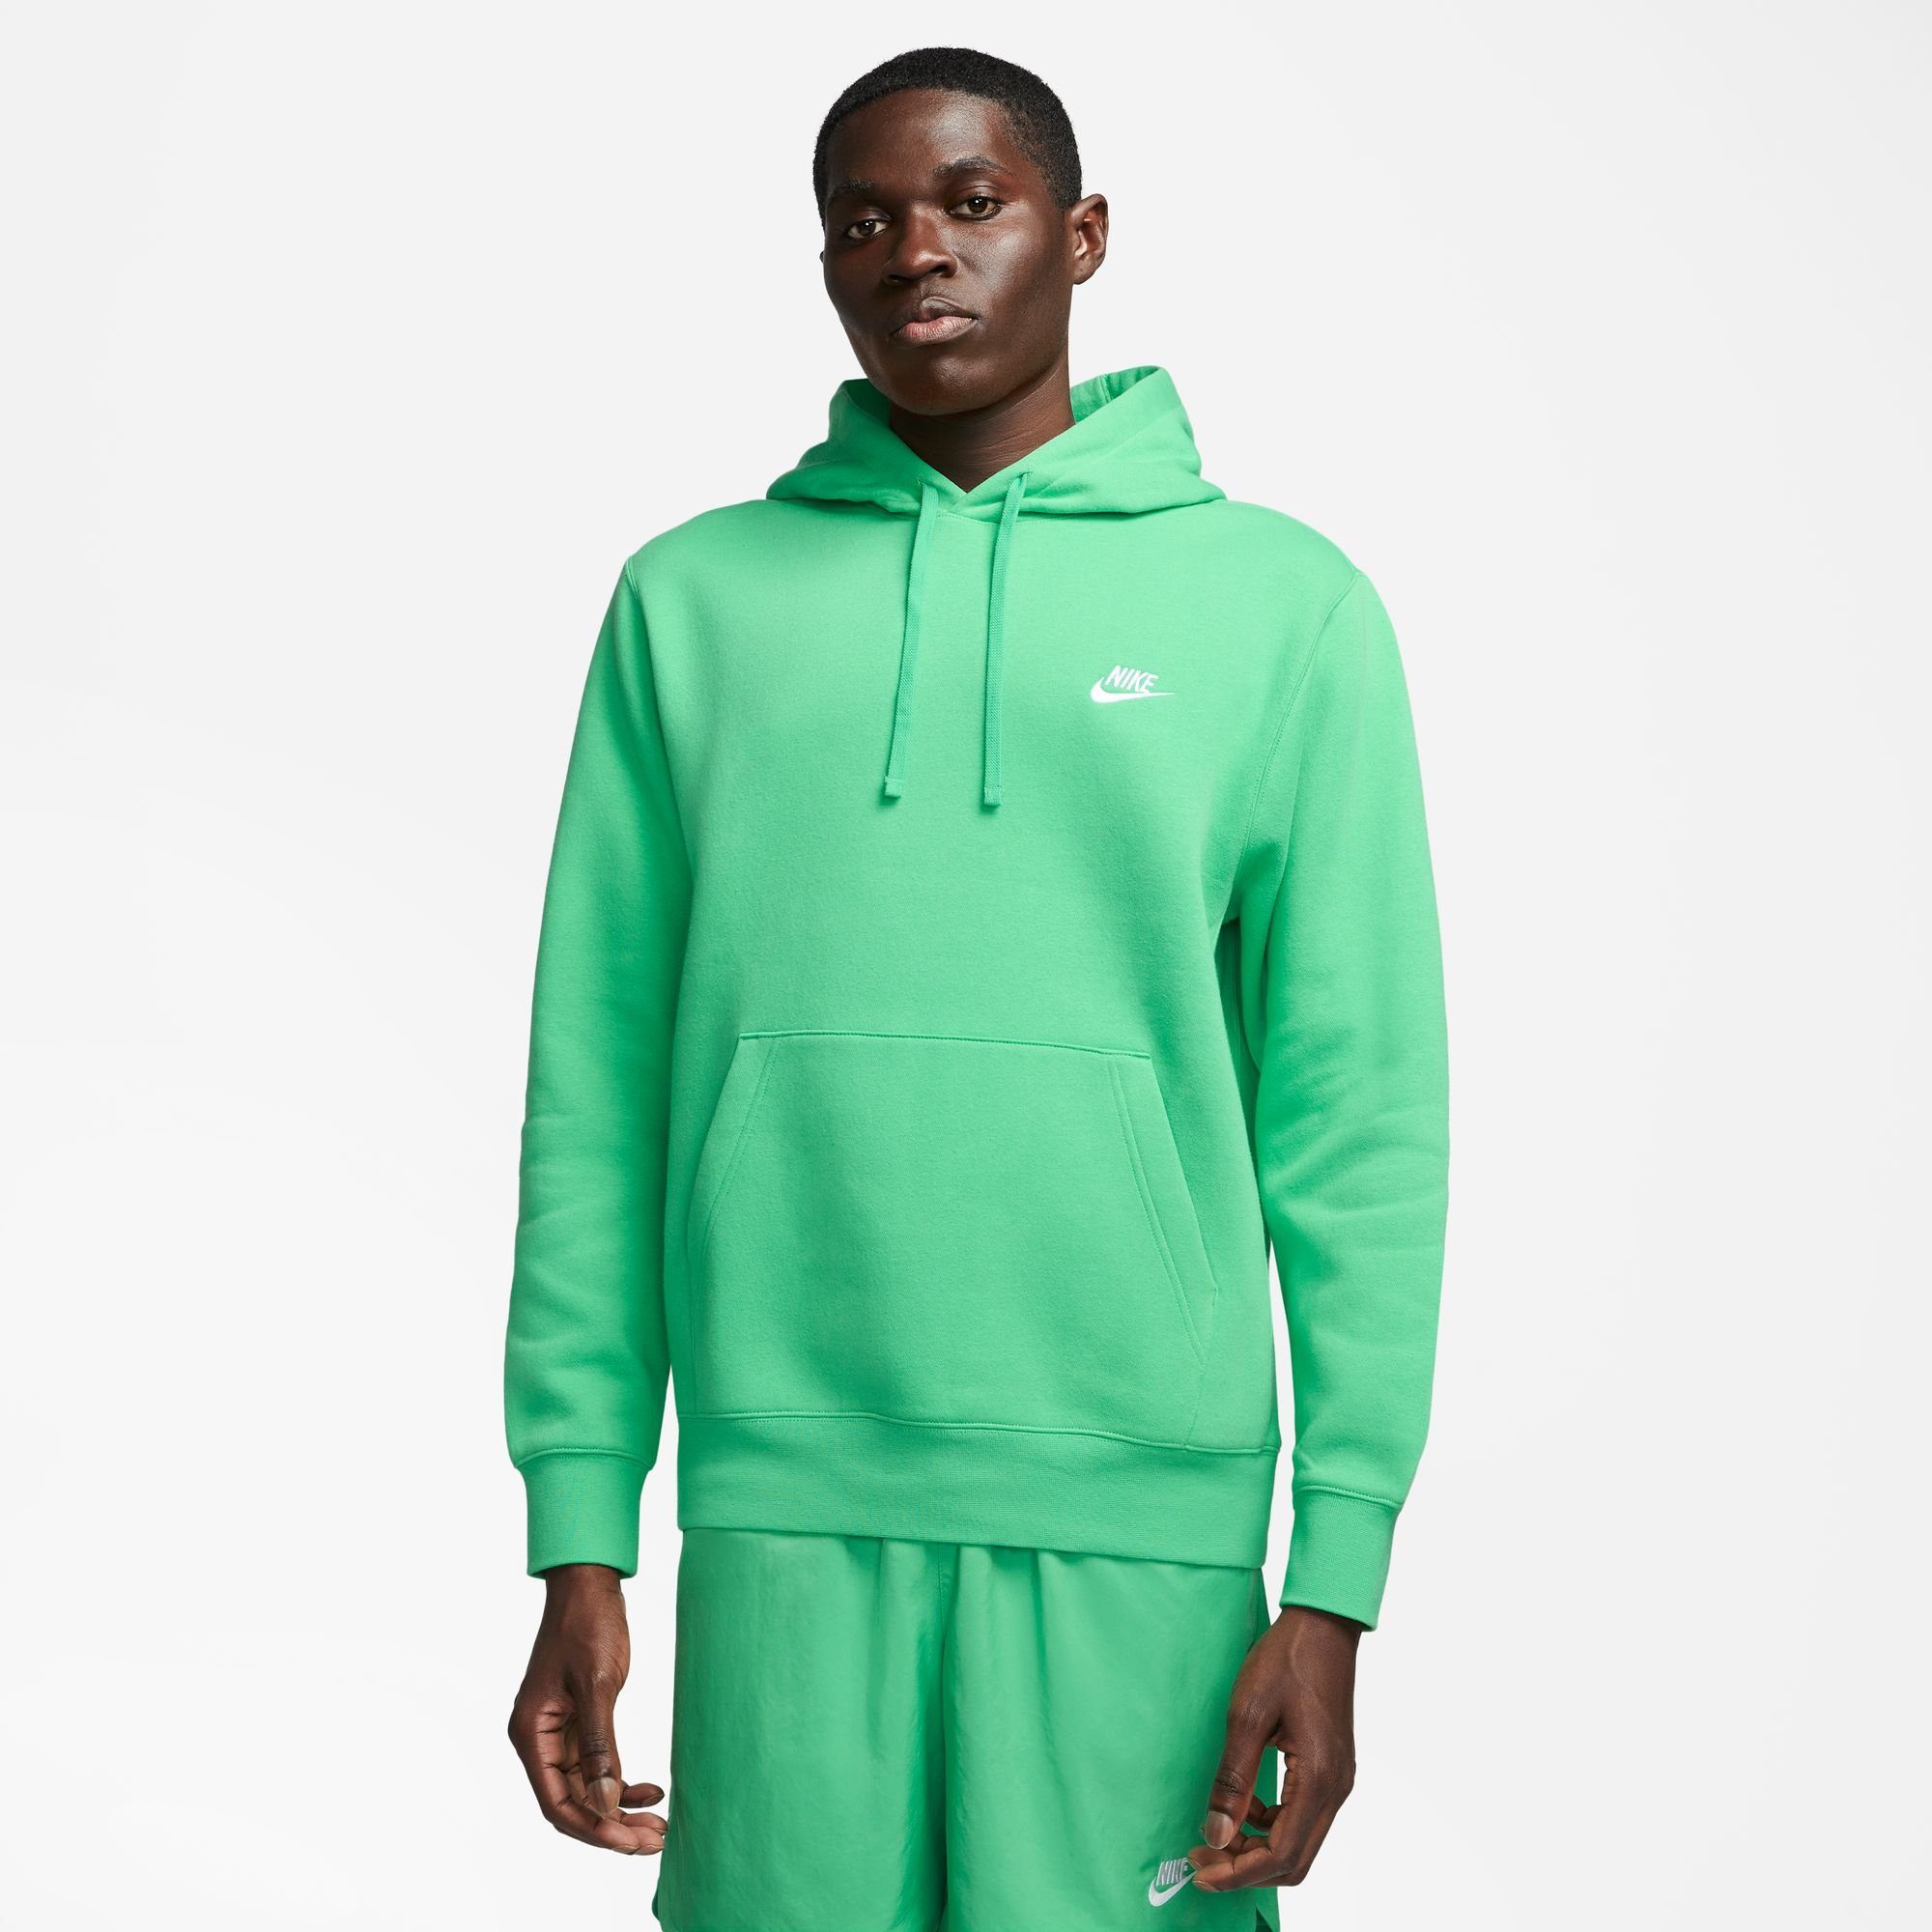 Vertrouwelijk Keizer Boek Nike Sportswear Hoodie CLUB FLEECE PULLOVER HOODIE online verkrijgbaar |  OTTO